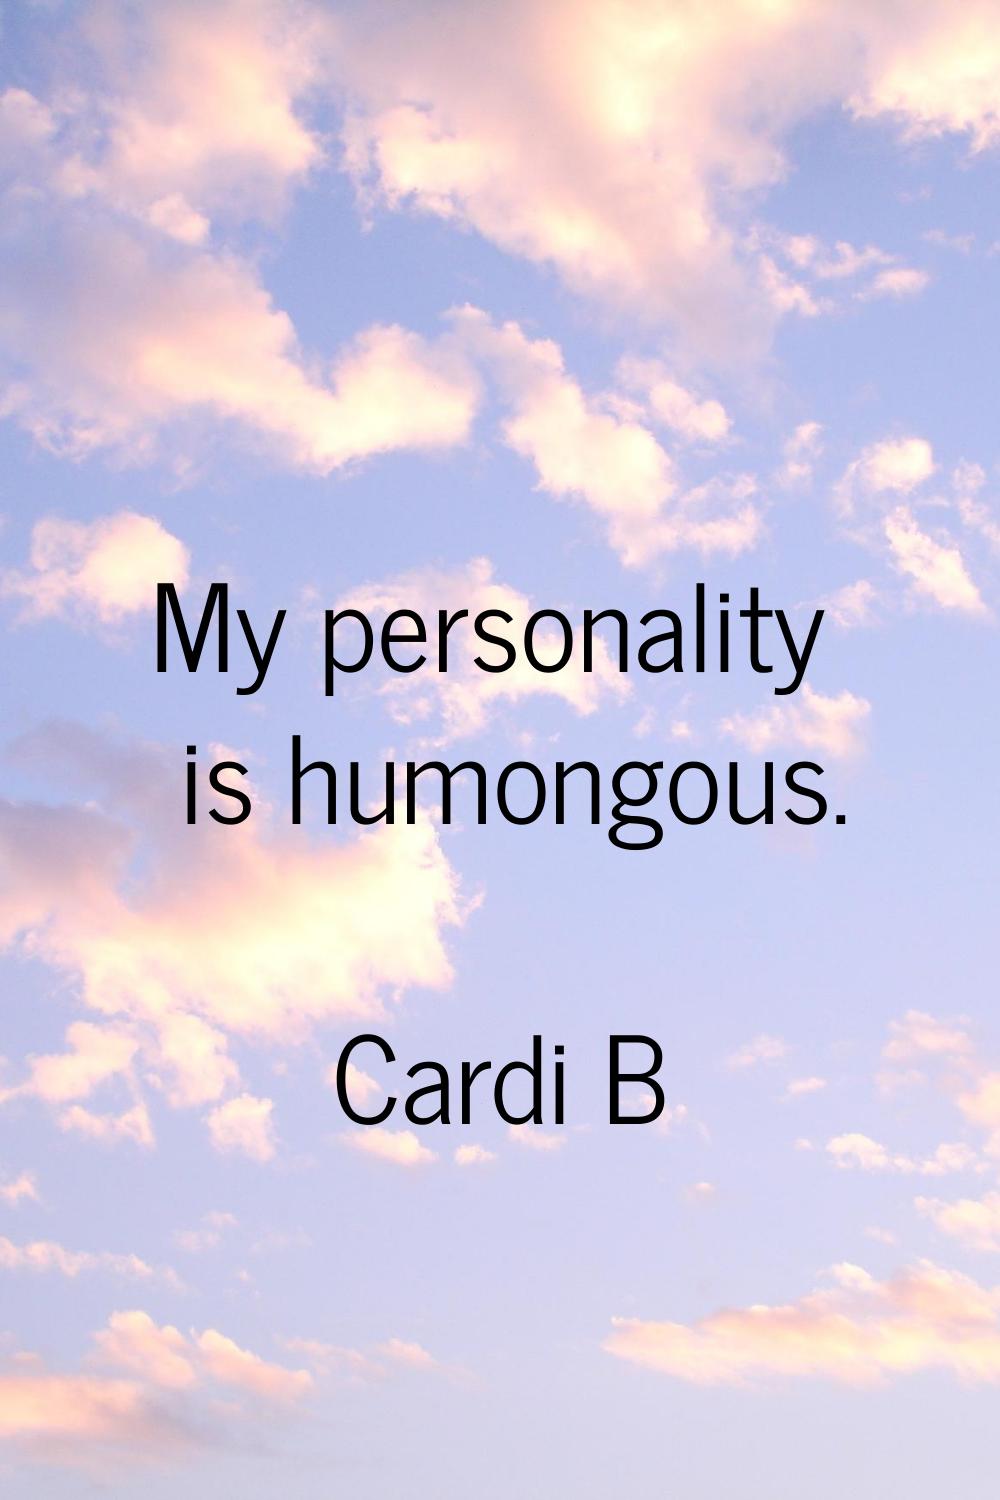 My personality is humongous.